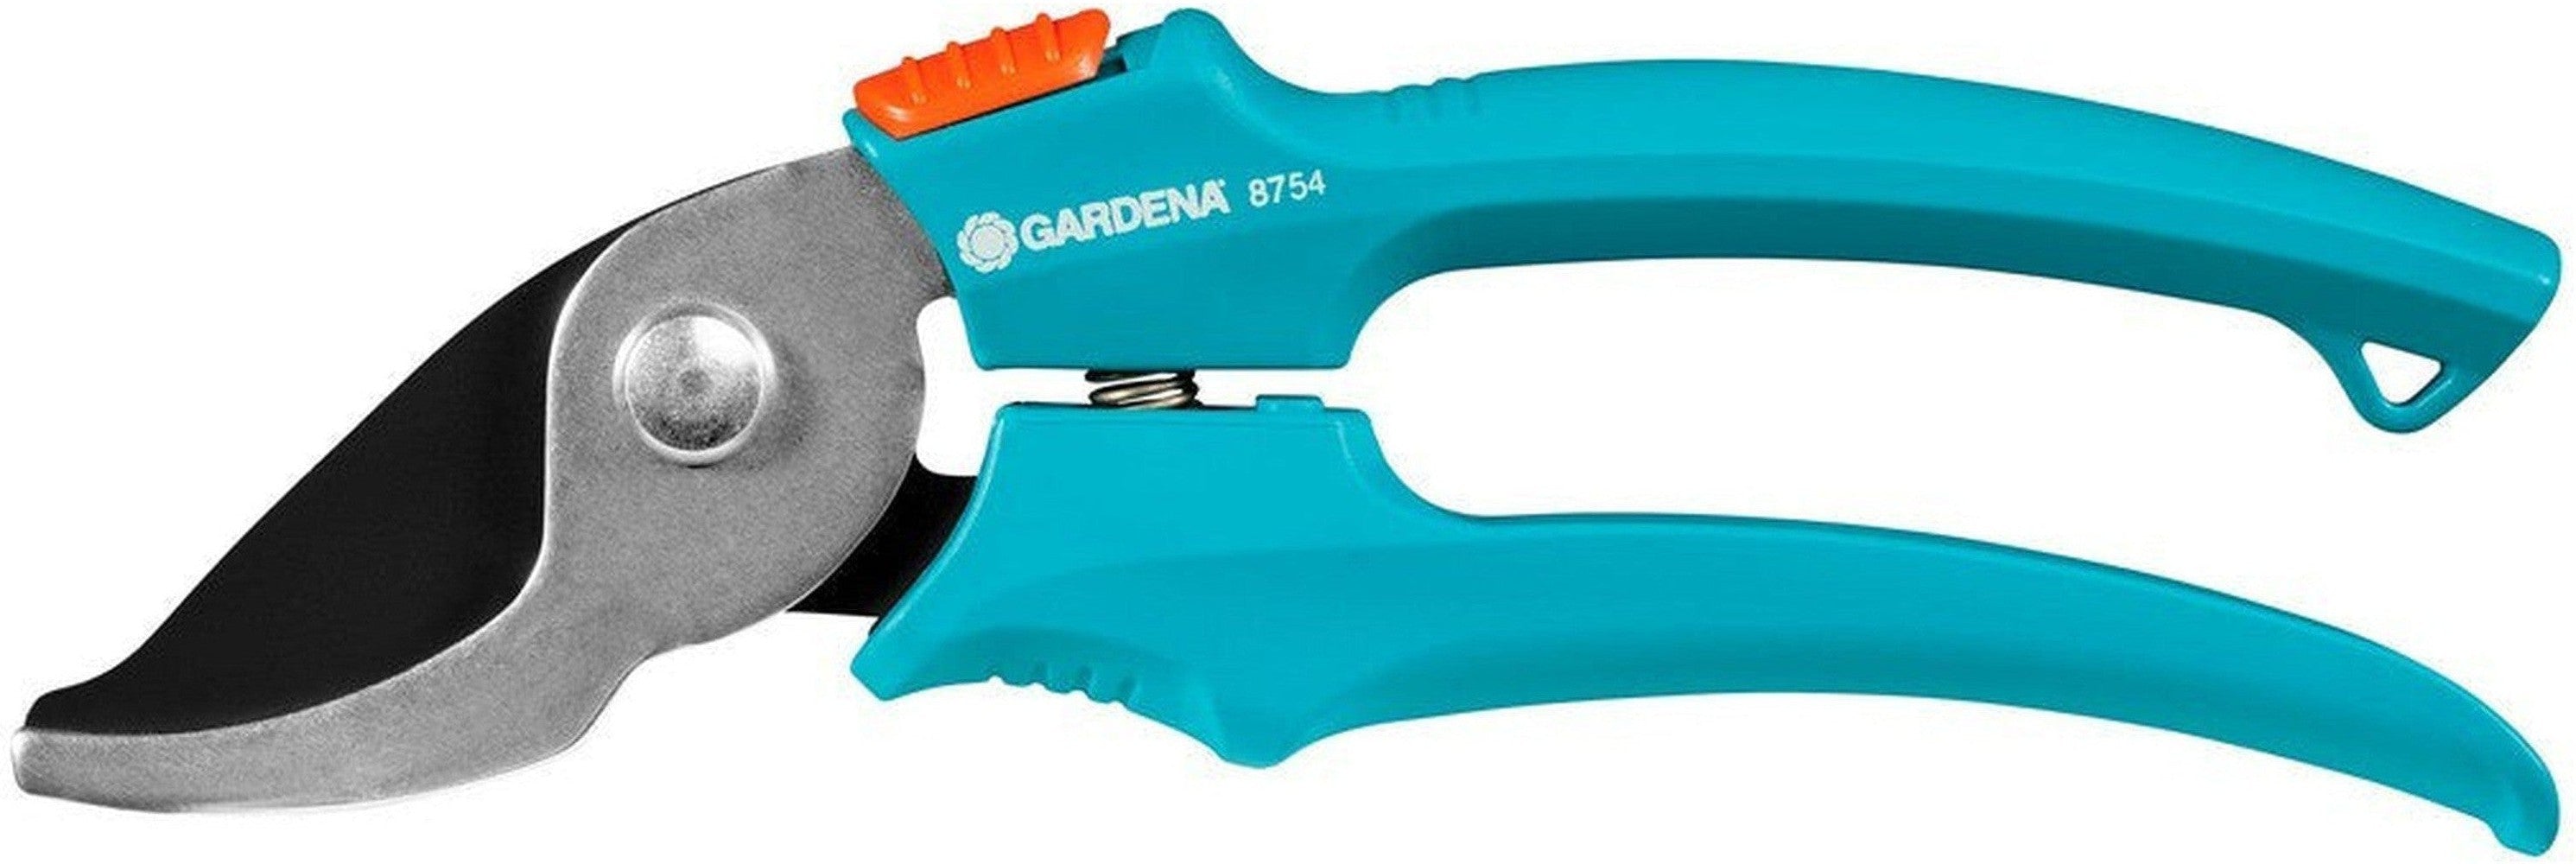 Beskæring Shears Gardena 8754-30 18 mm